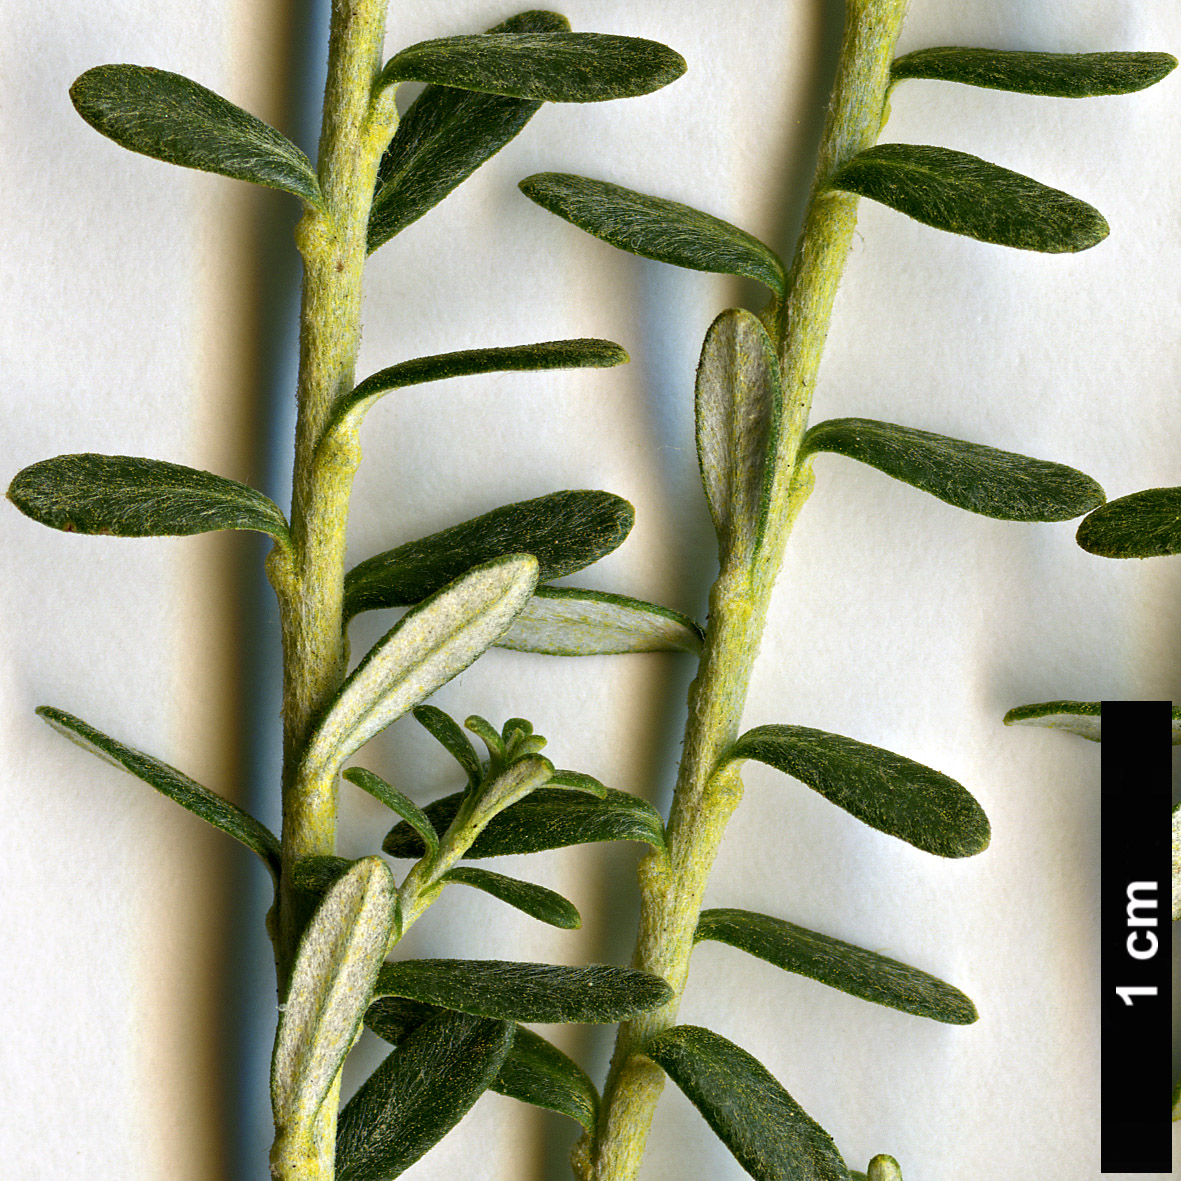 High resolution image: Family: Asteraceae - Genus: Ozothamnus - Taxon: leptophyllus - SpeciesSub: Albidus Group